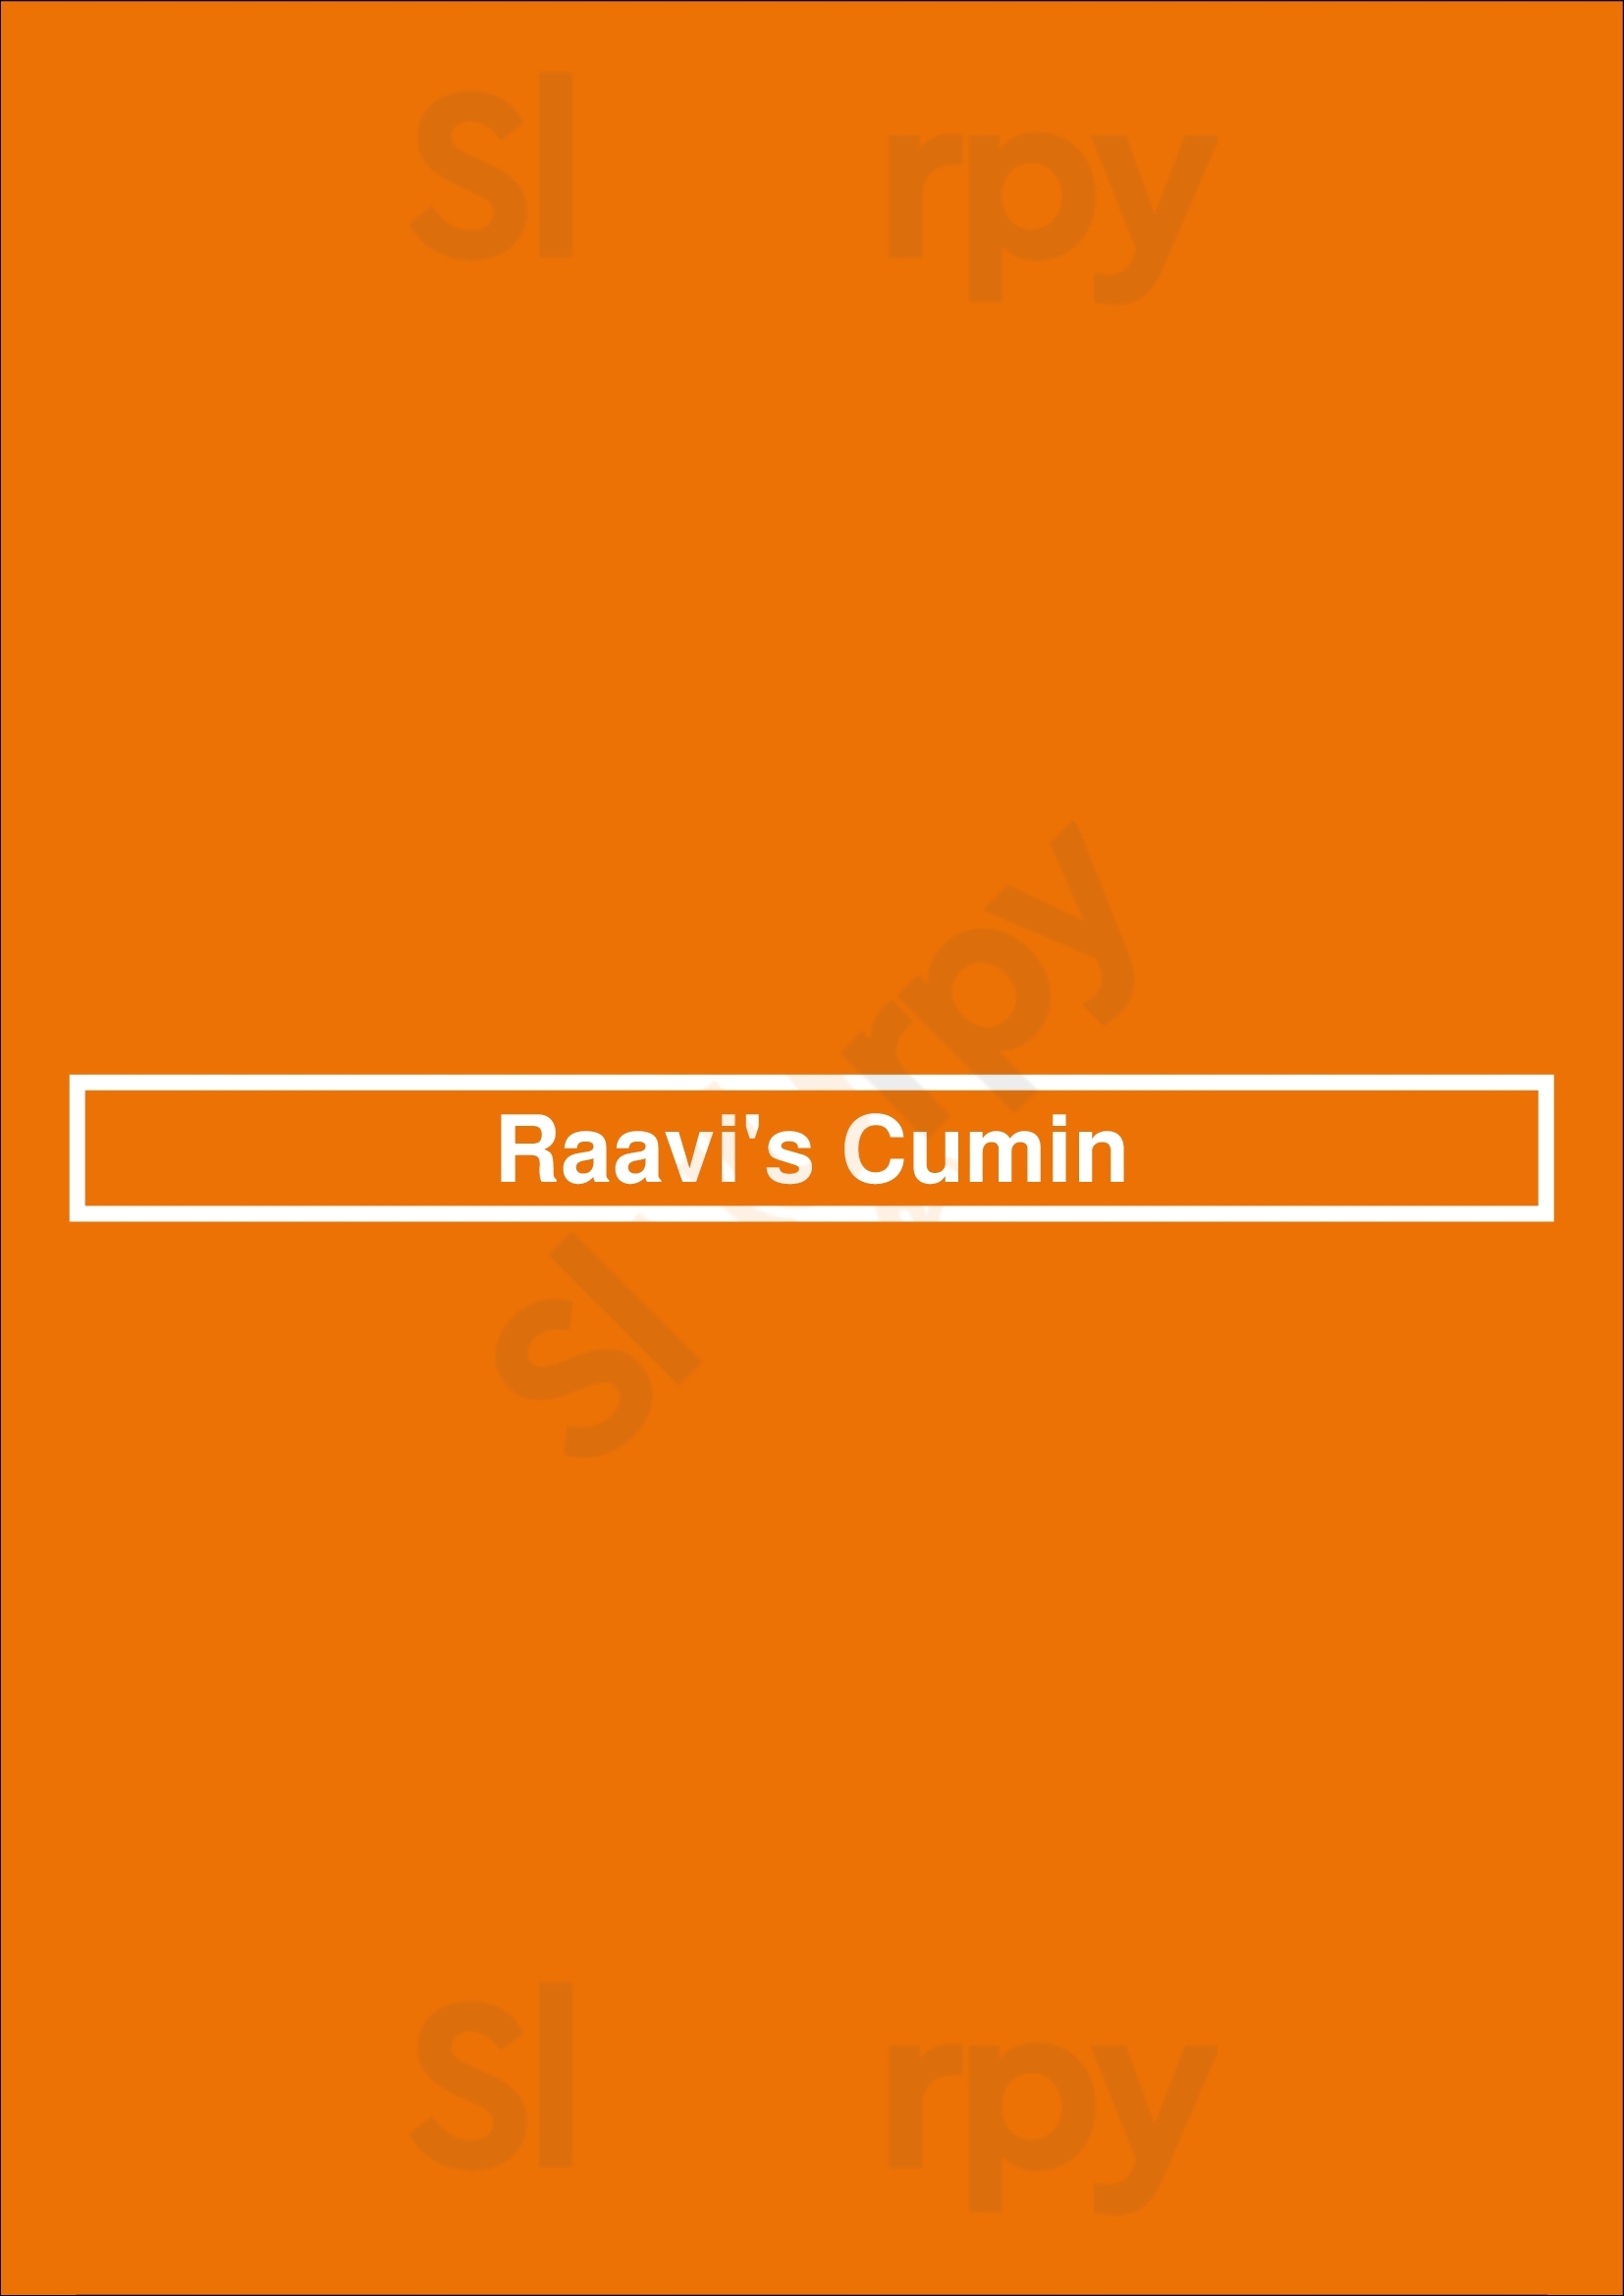 Raavi's Cumin Crows Nest Menu - 1